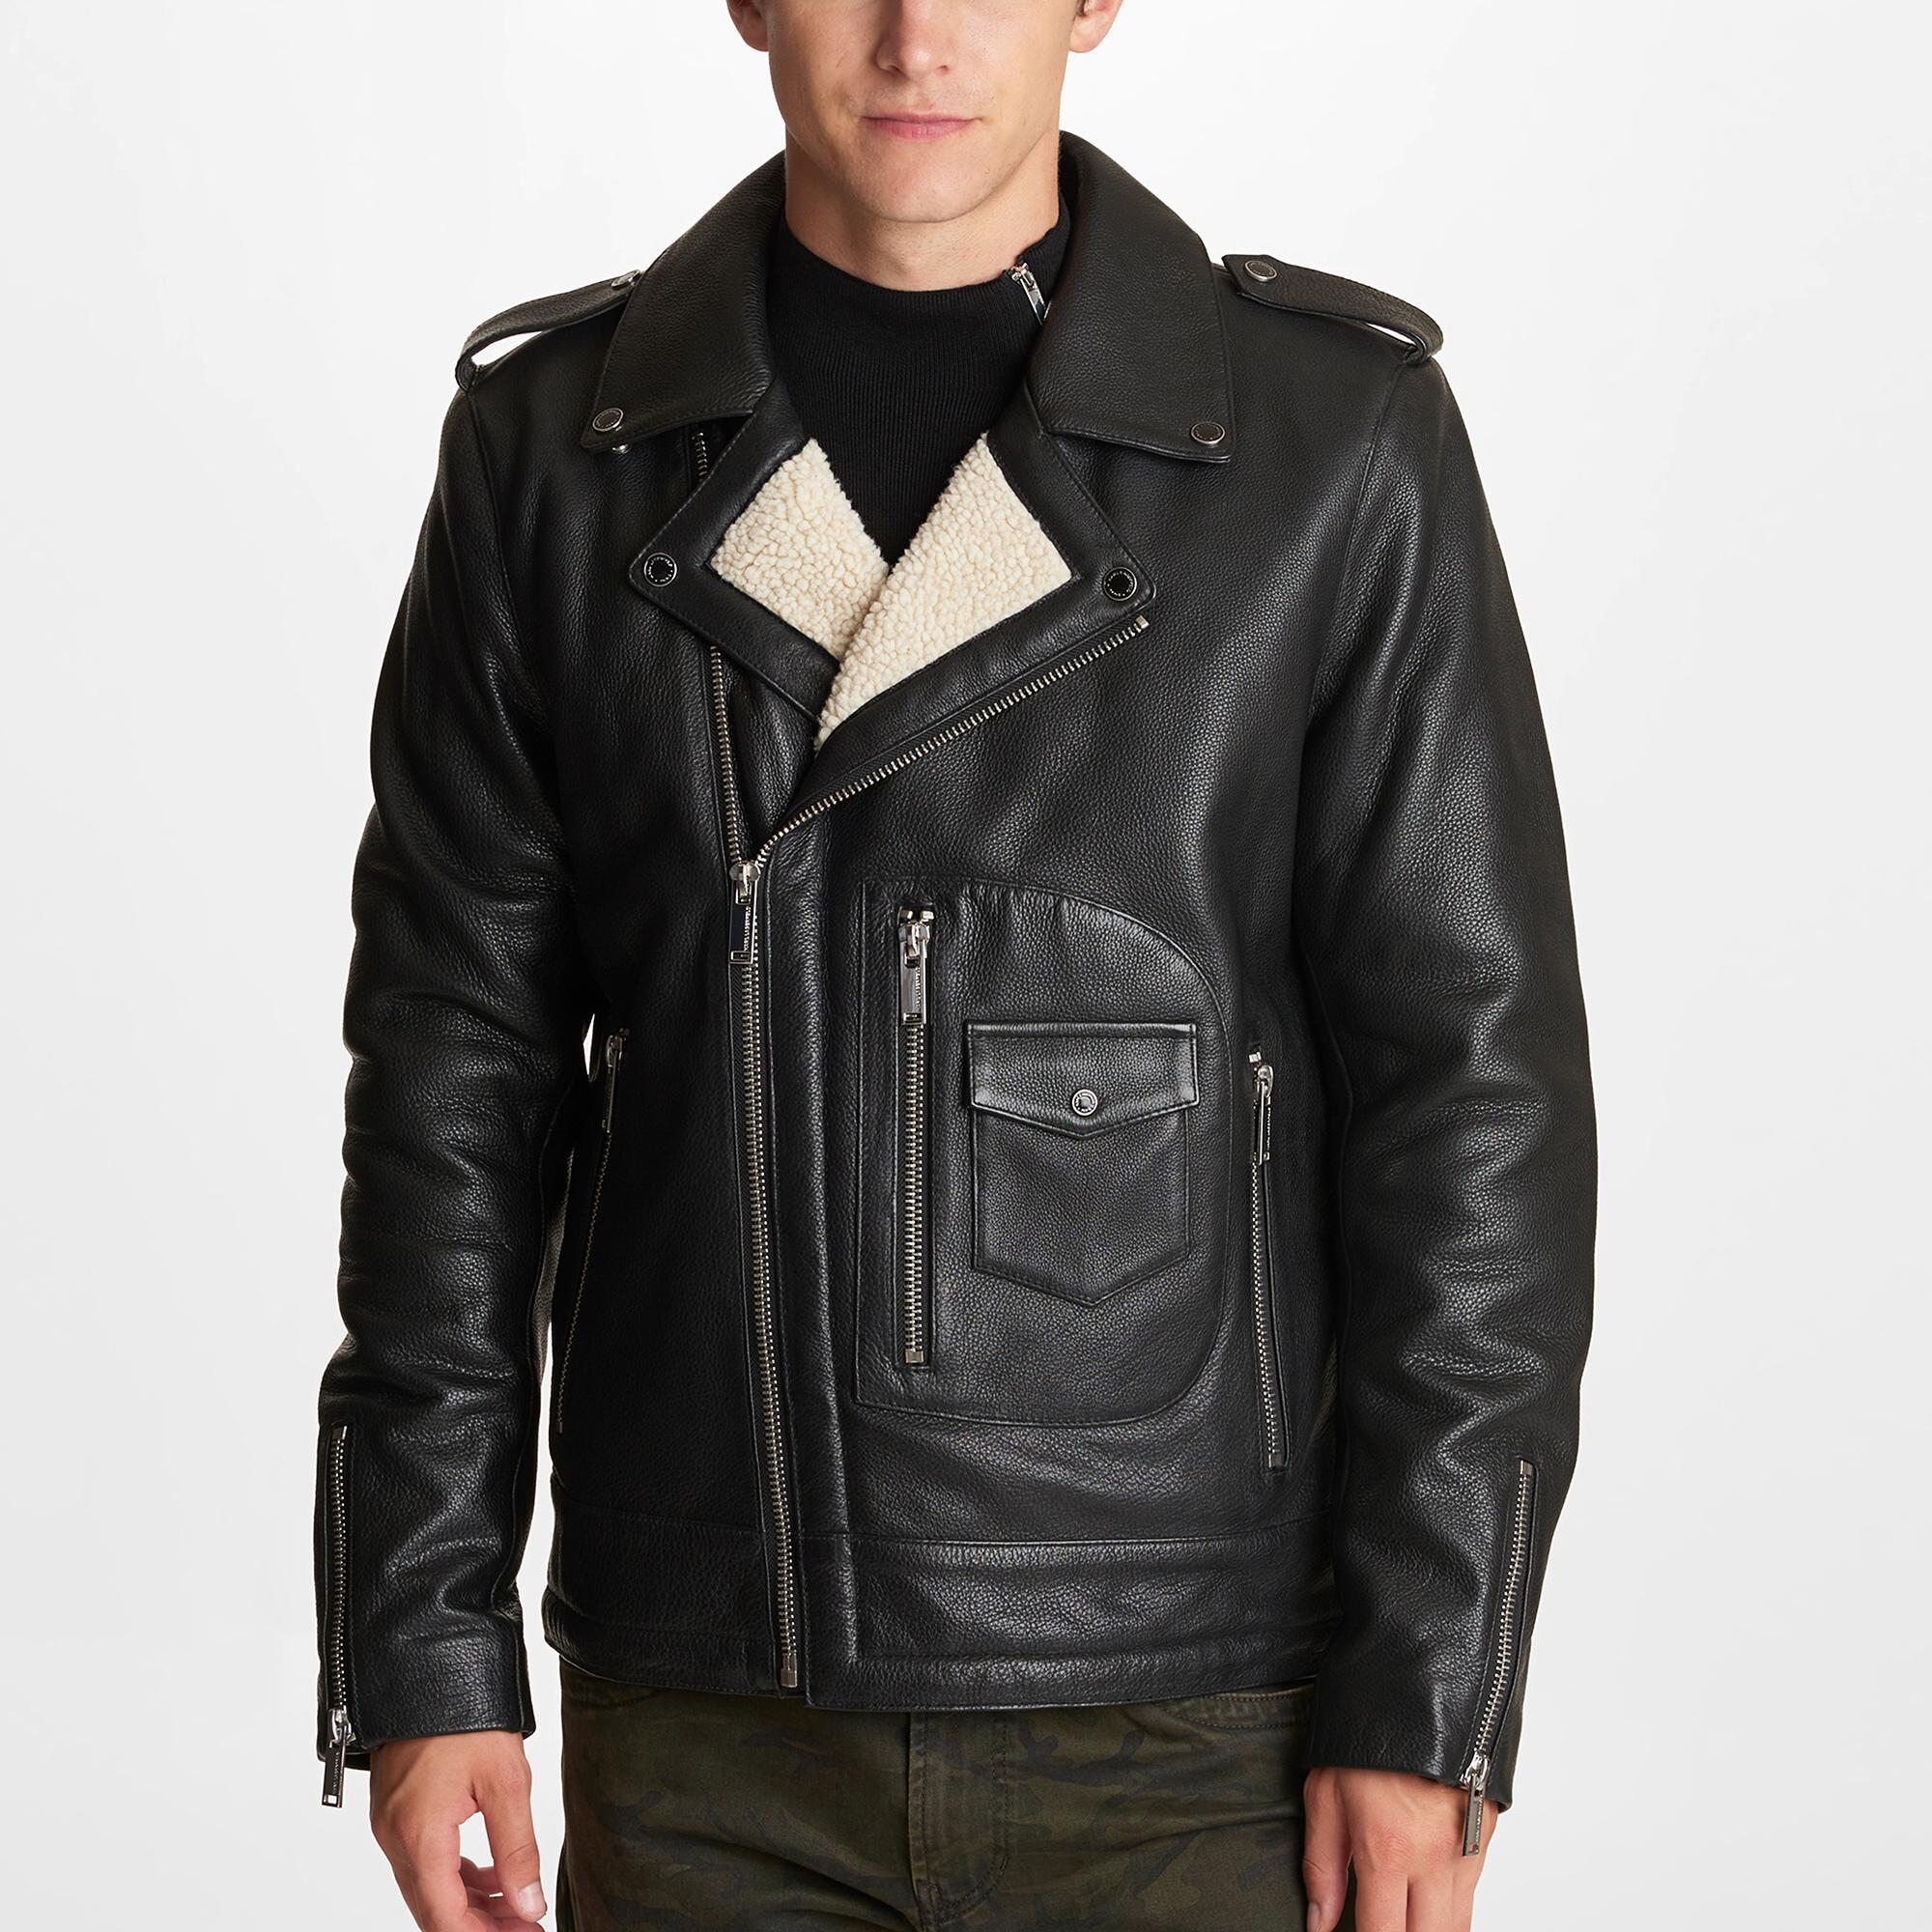 Karl Lagerfeld Sherpa Lined Leather Jacket in Black - Lyst